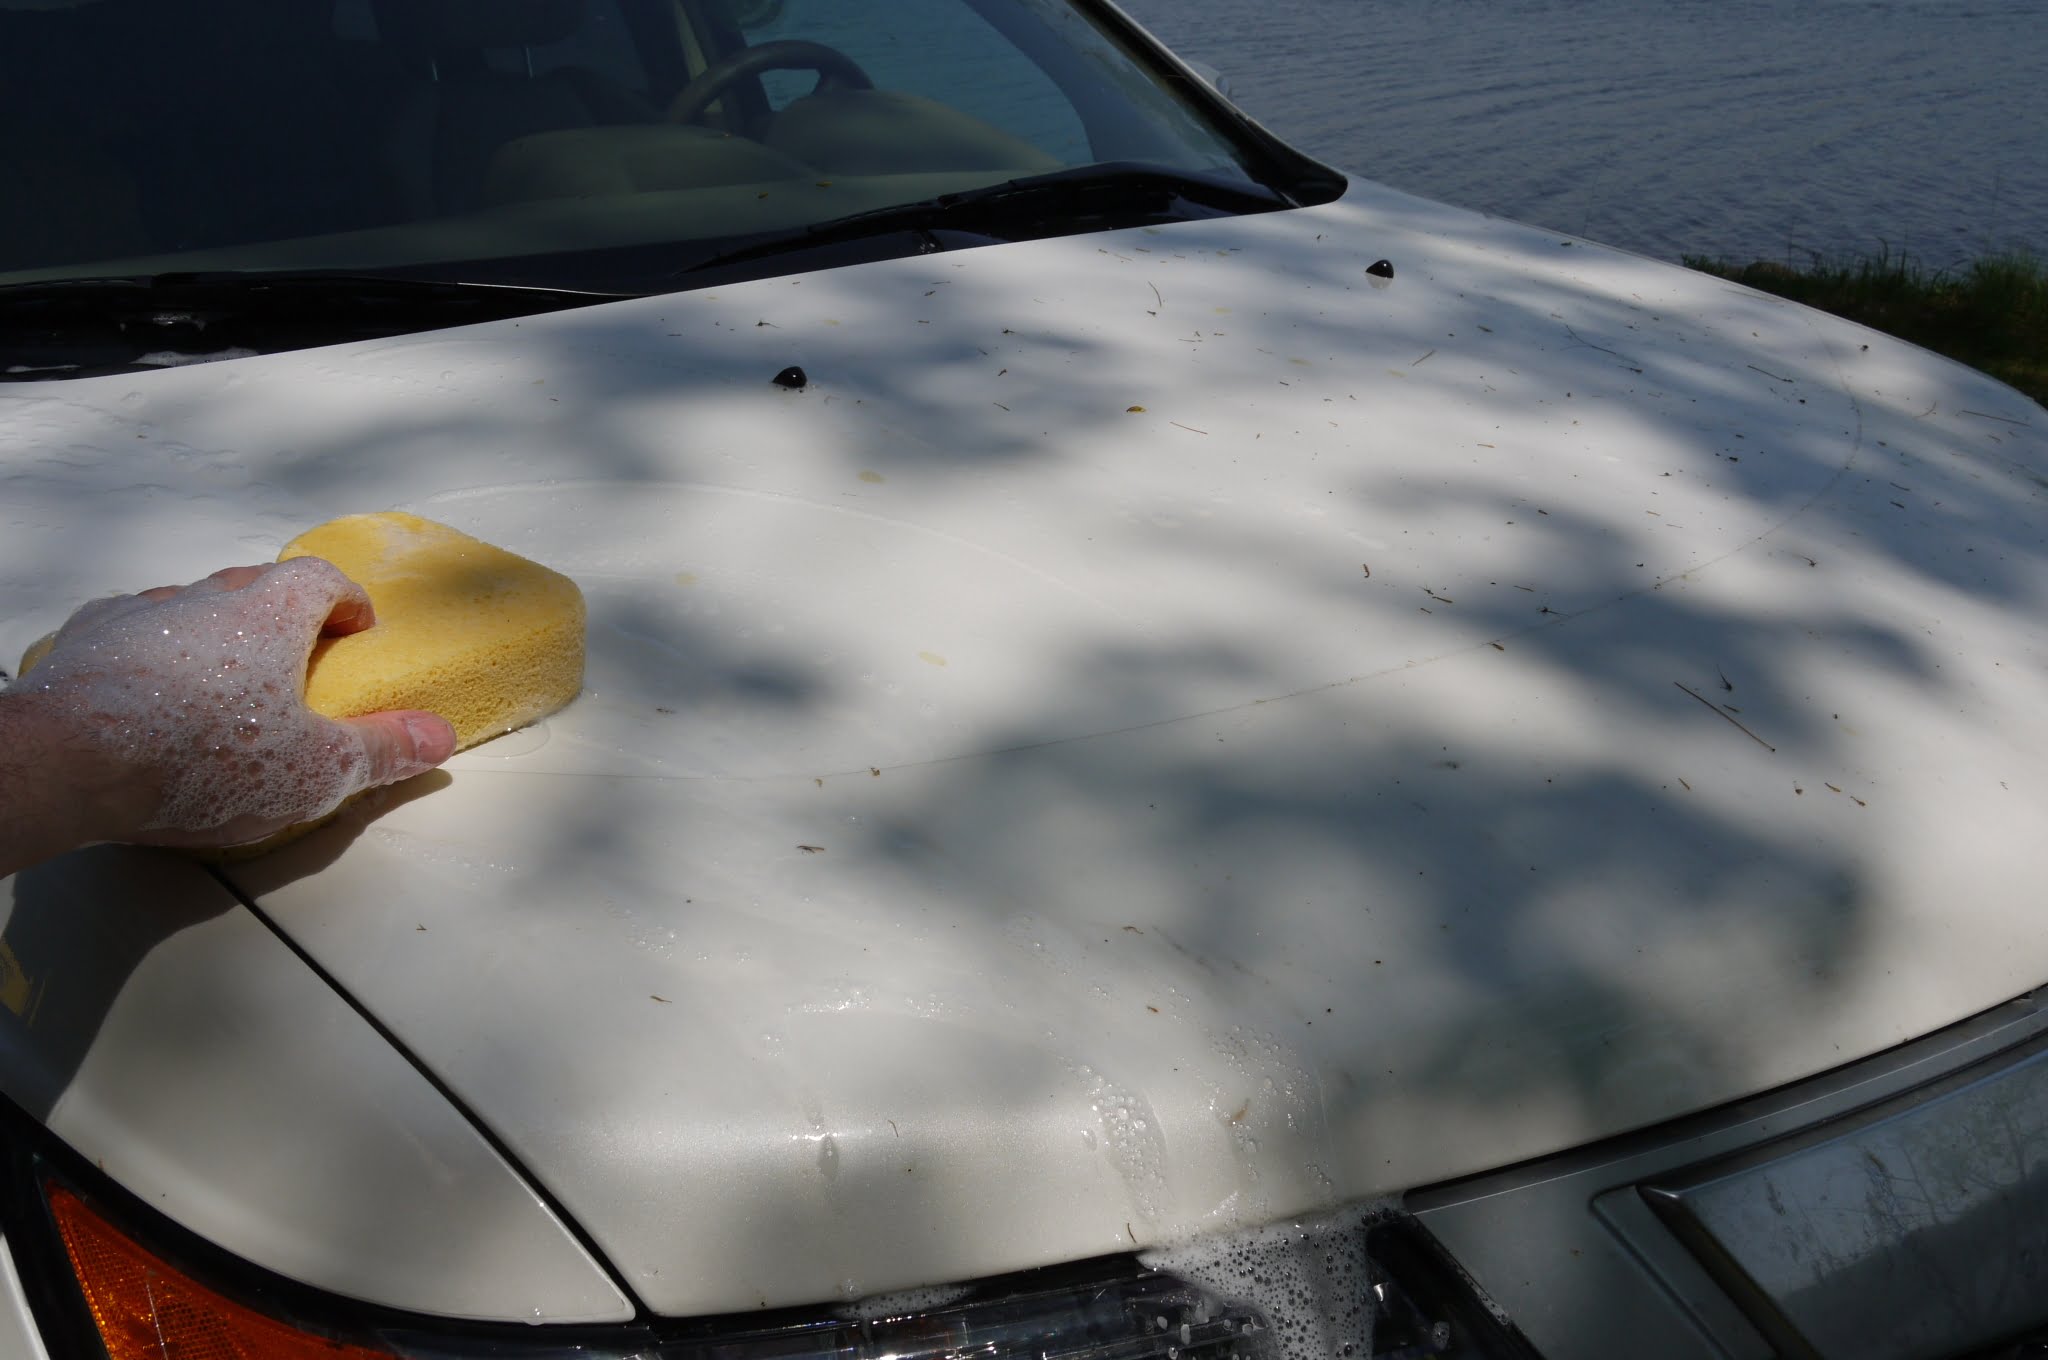 Tree Sap Removal - The Car Wash Method » Way Blog